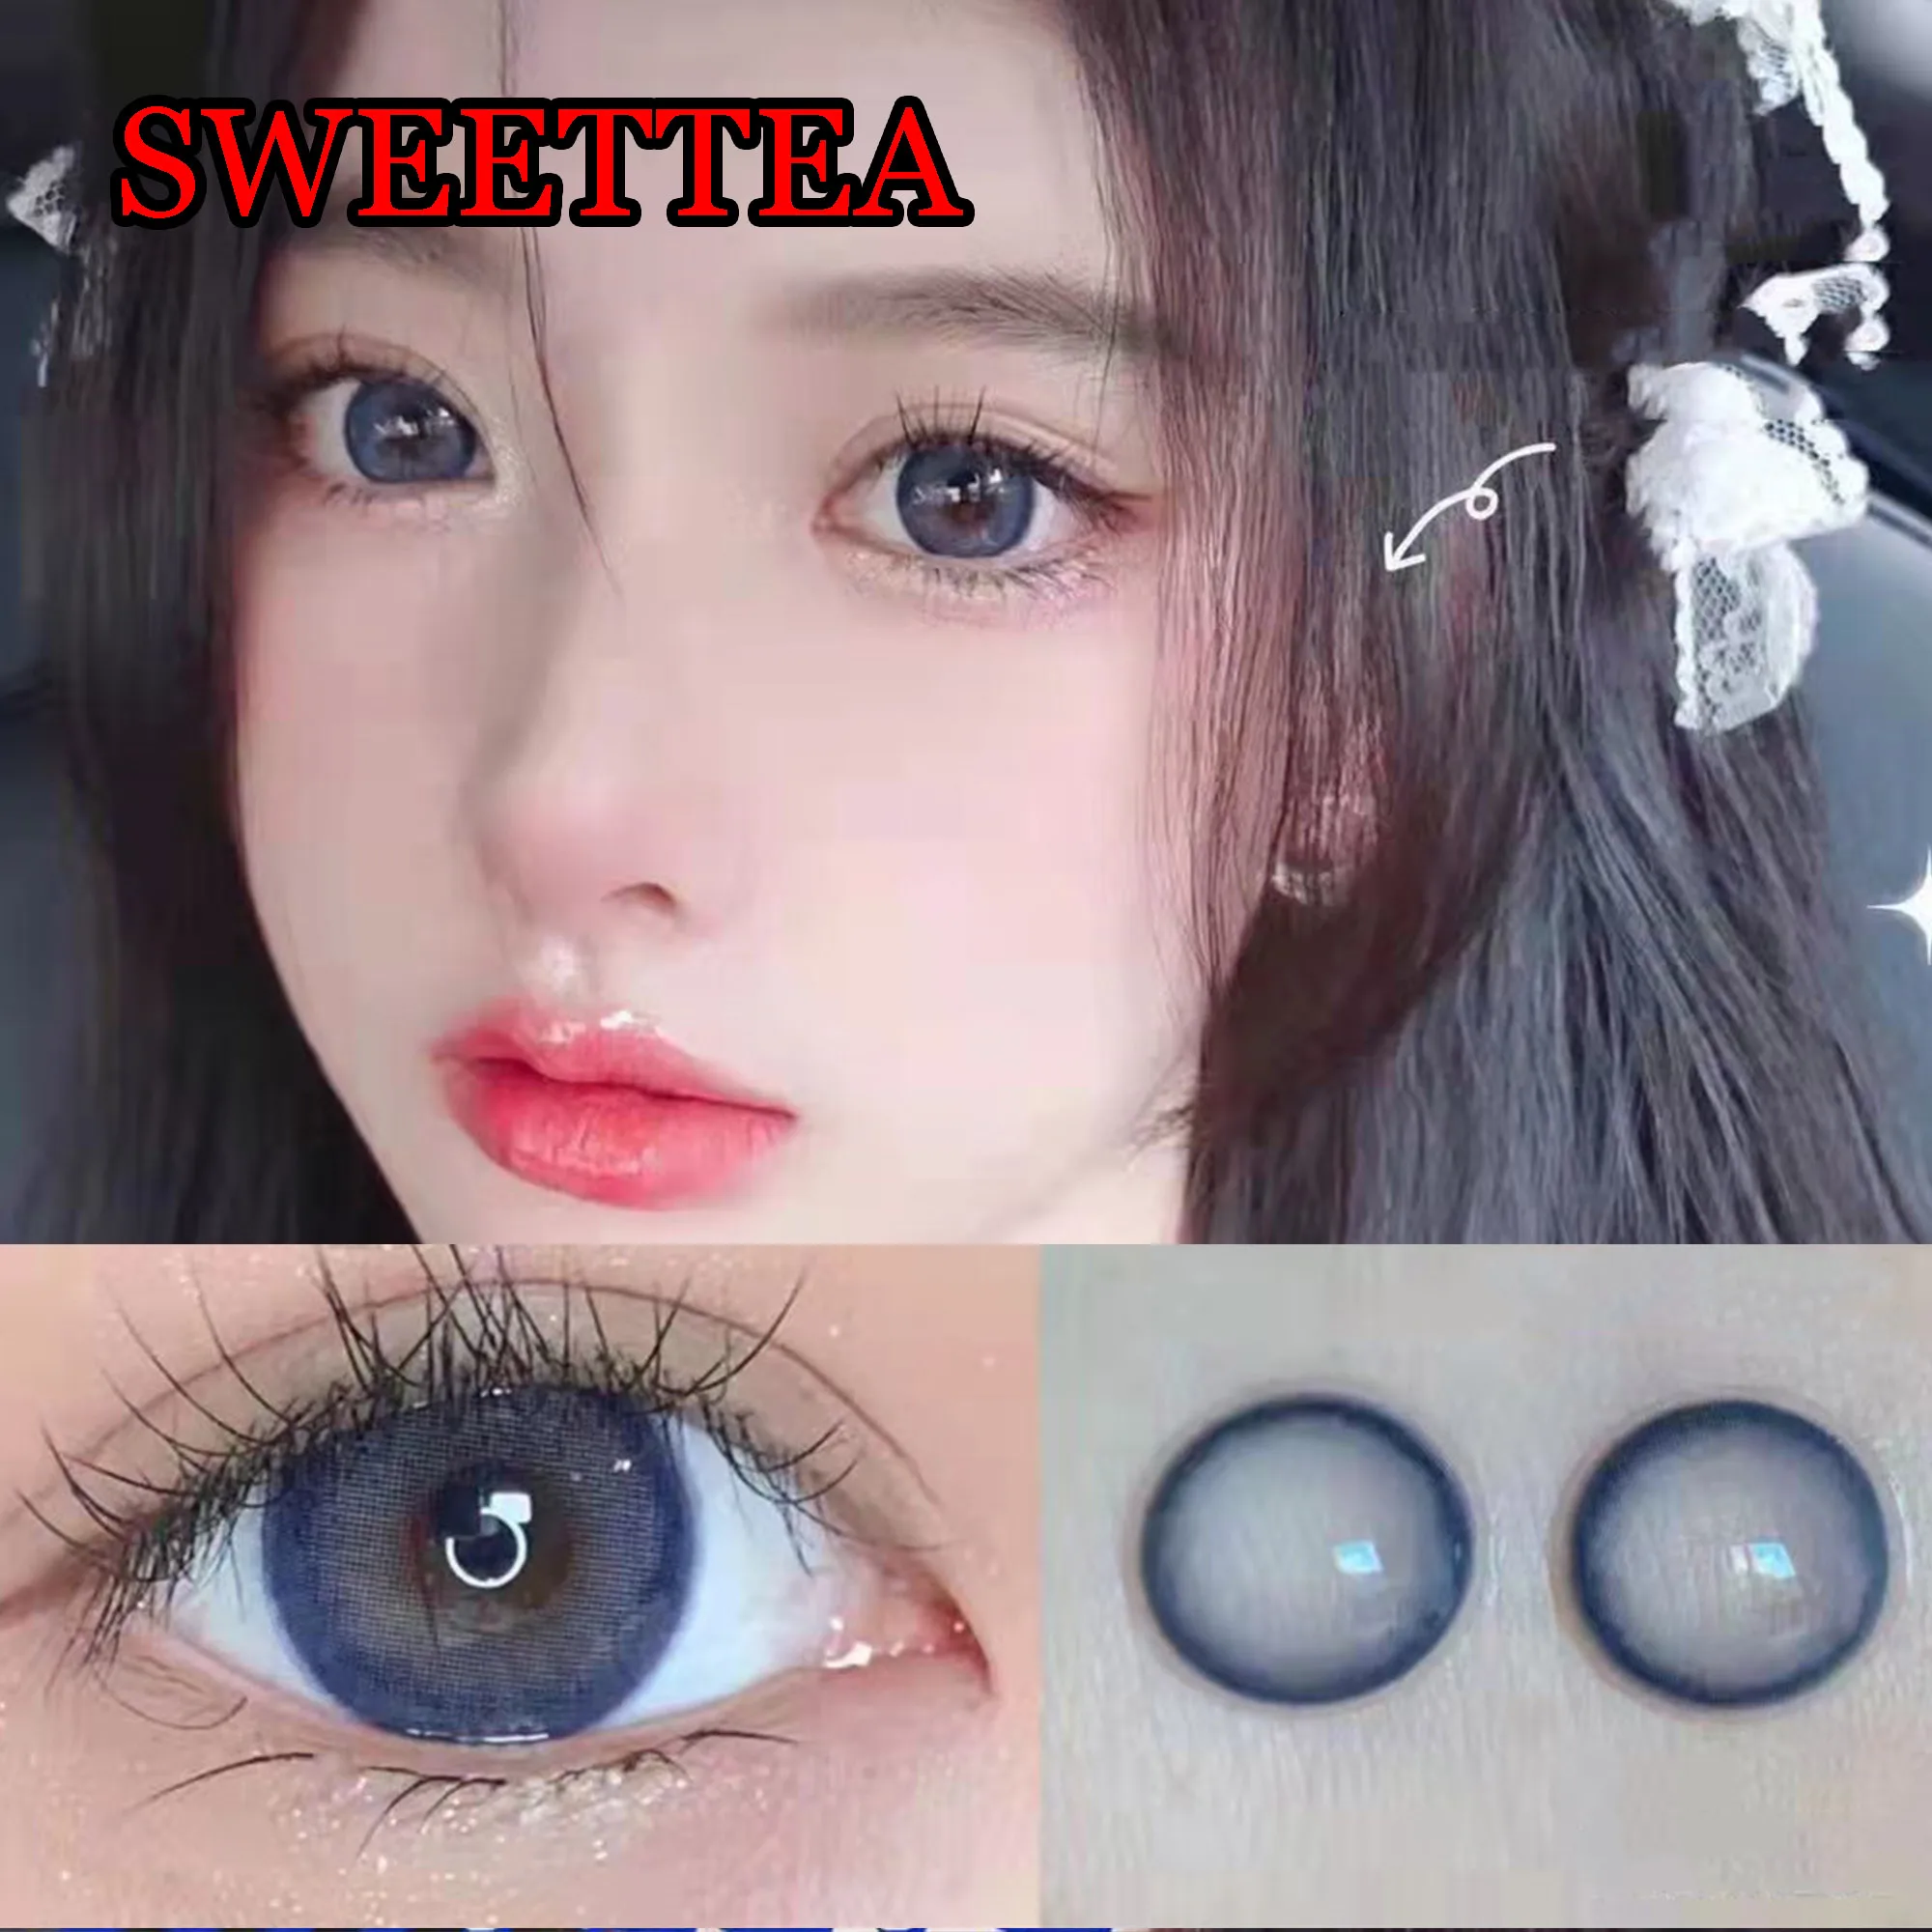 

Hotsale Fresh Contact Lenses Cosplay Dolly Eyes Women Men Cosmetic Makeup Tool линзы для глаз цветные Sweettea